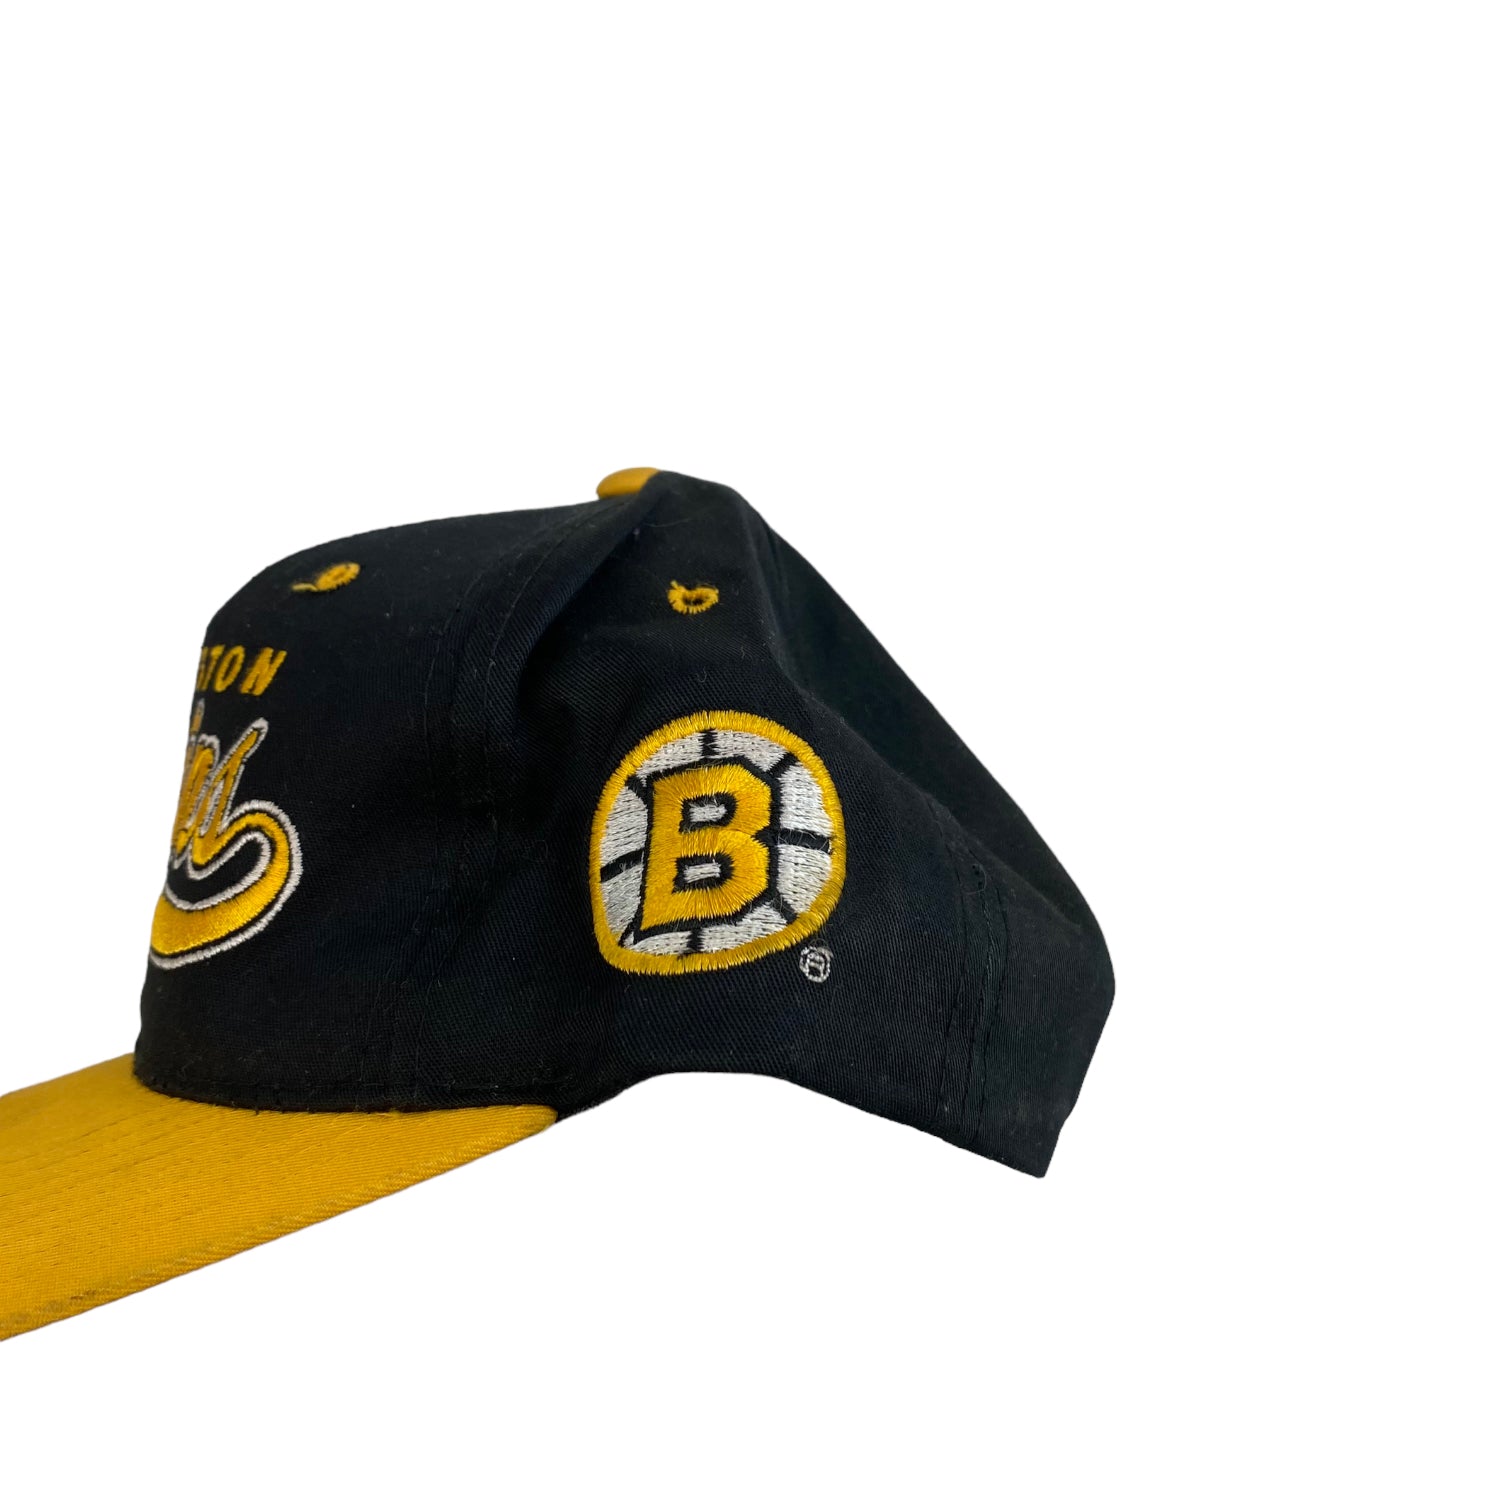 Vintage Boston Bruins NHL Starter Tail Sweep Snapback Black/Yellow